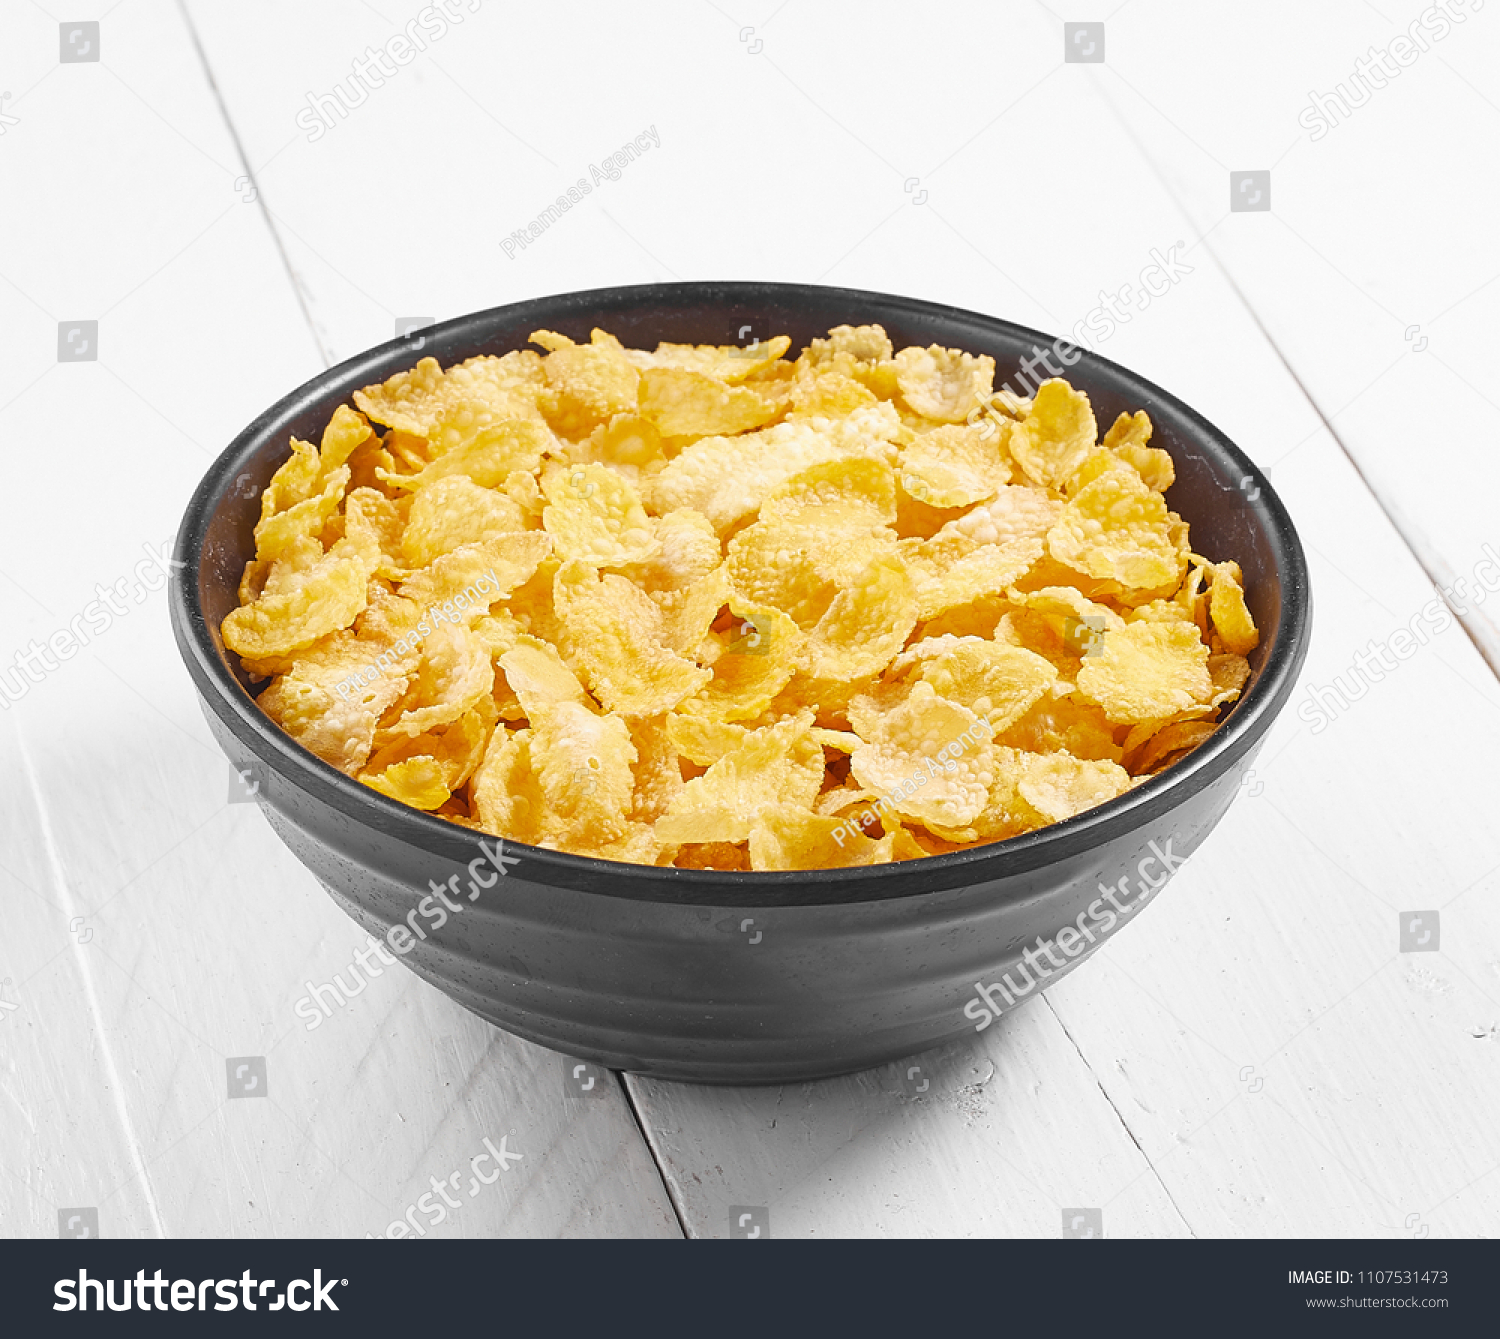 Cornflakes, Chips, Snacks #1107531473